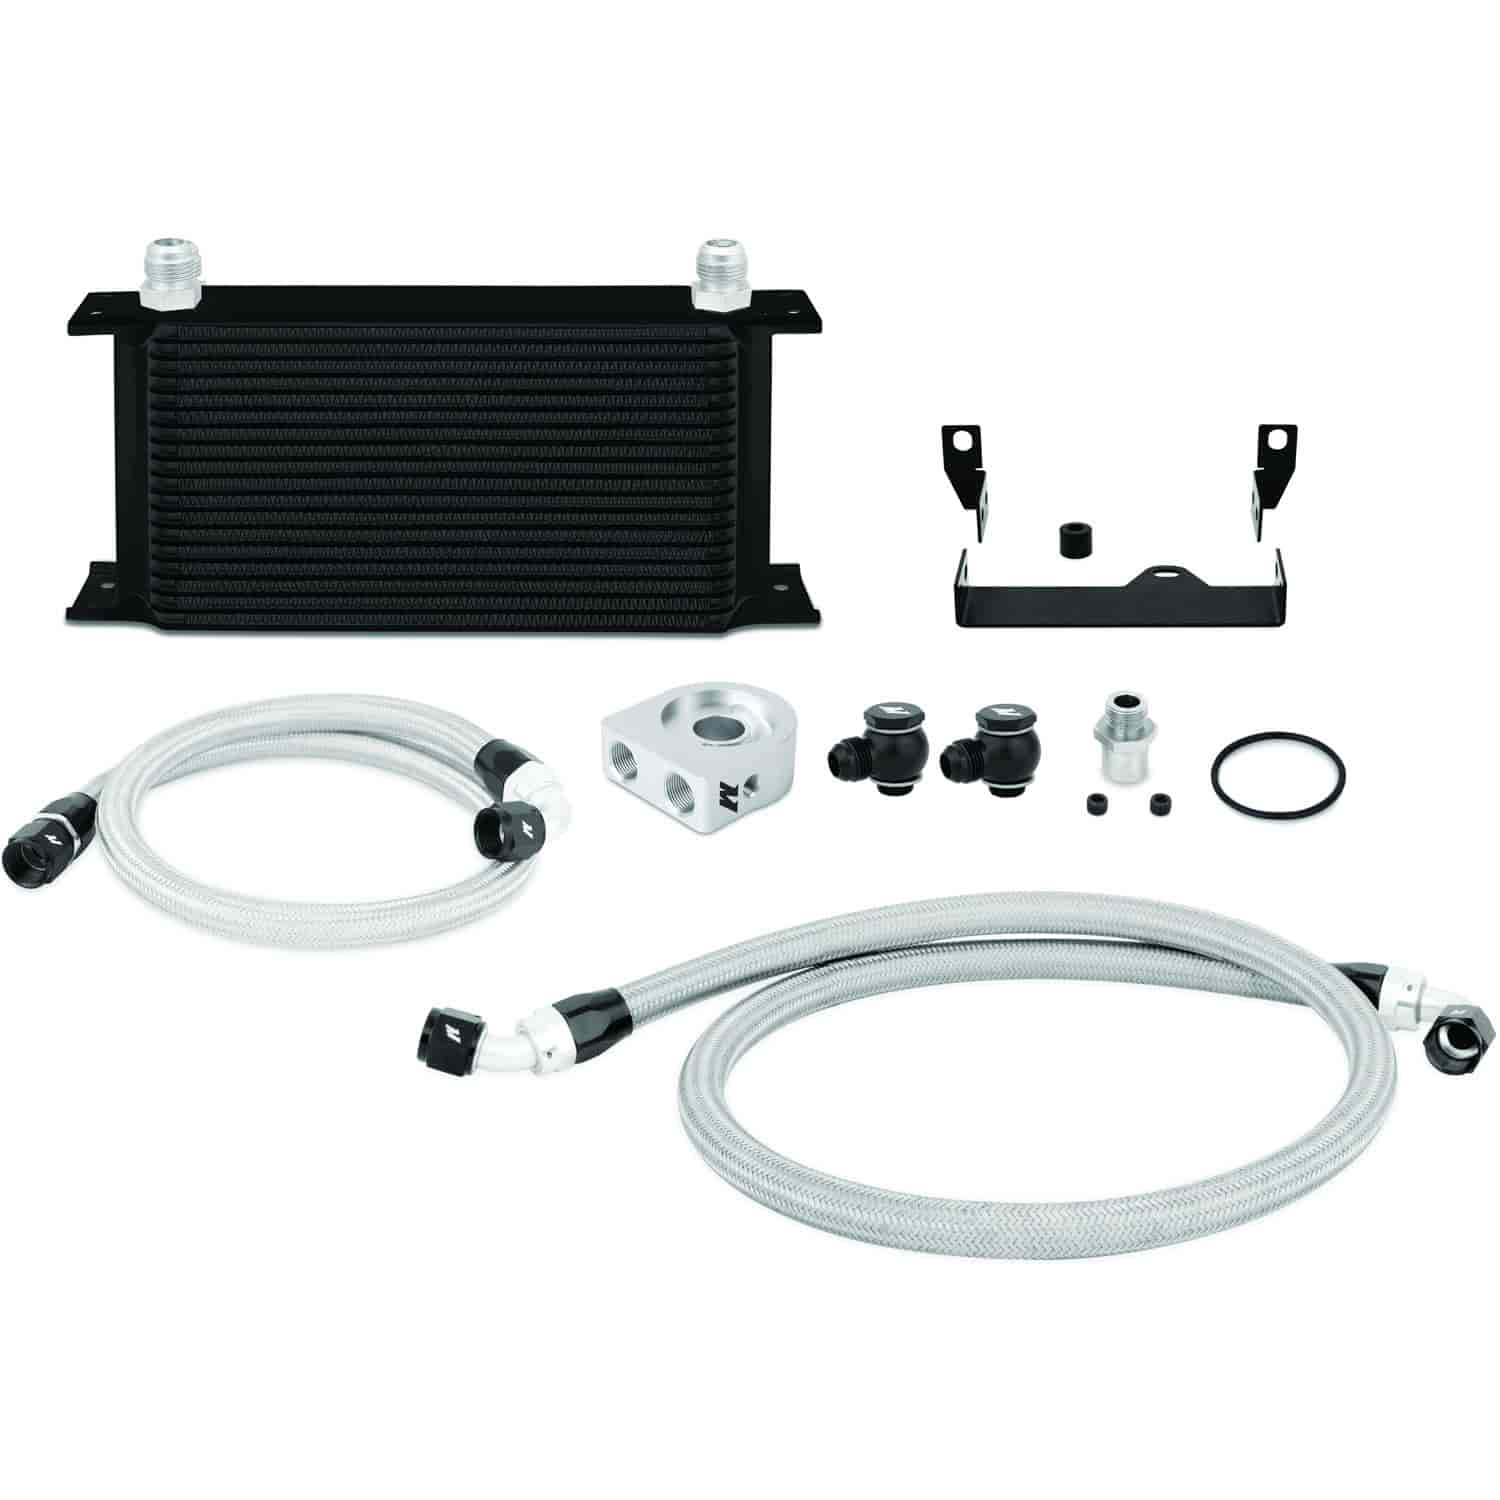 Subaru WRX/STi Oil Cooler Kit Black - MFG Part No. MMOC-WRX-06BK